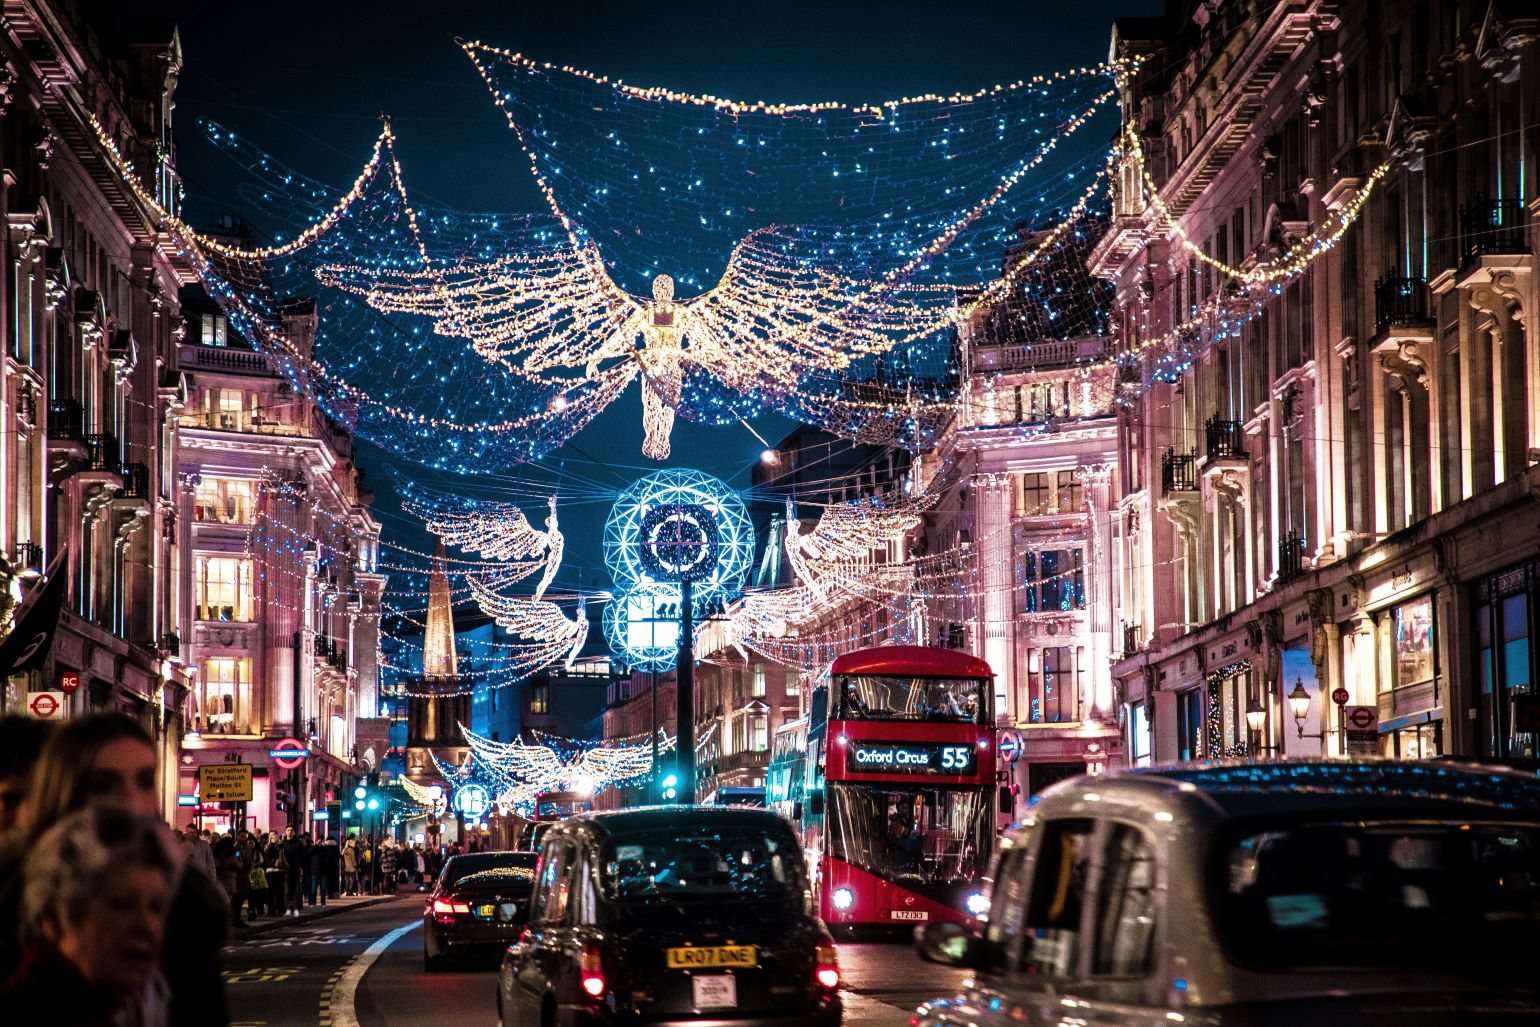 London at Christmas time